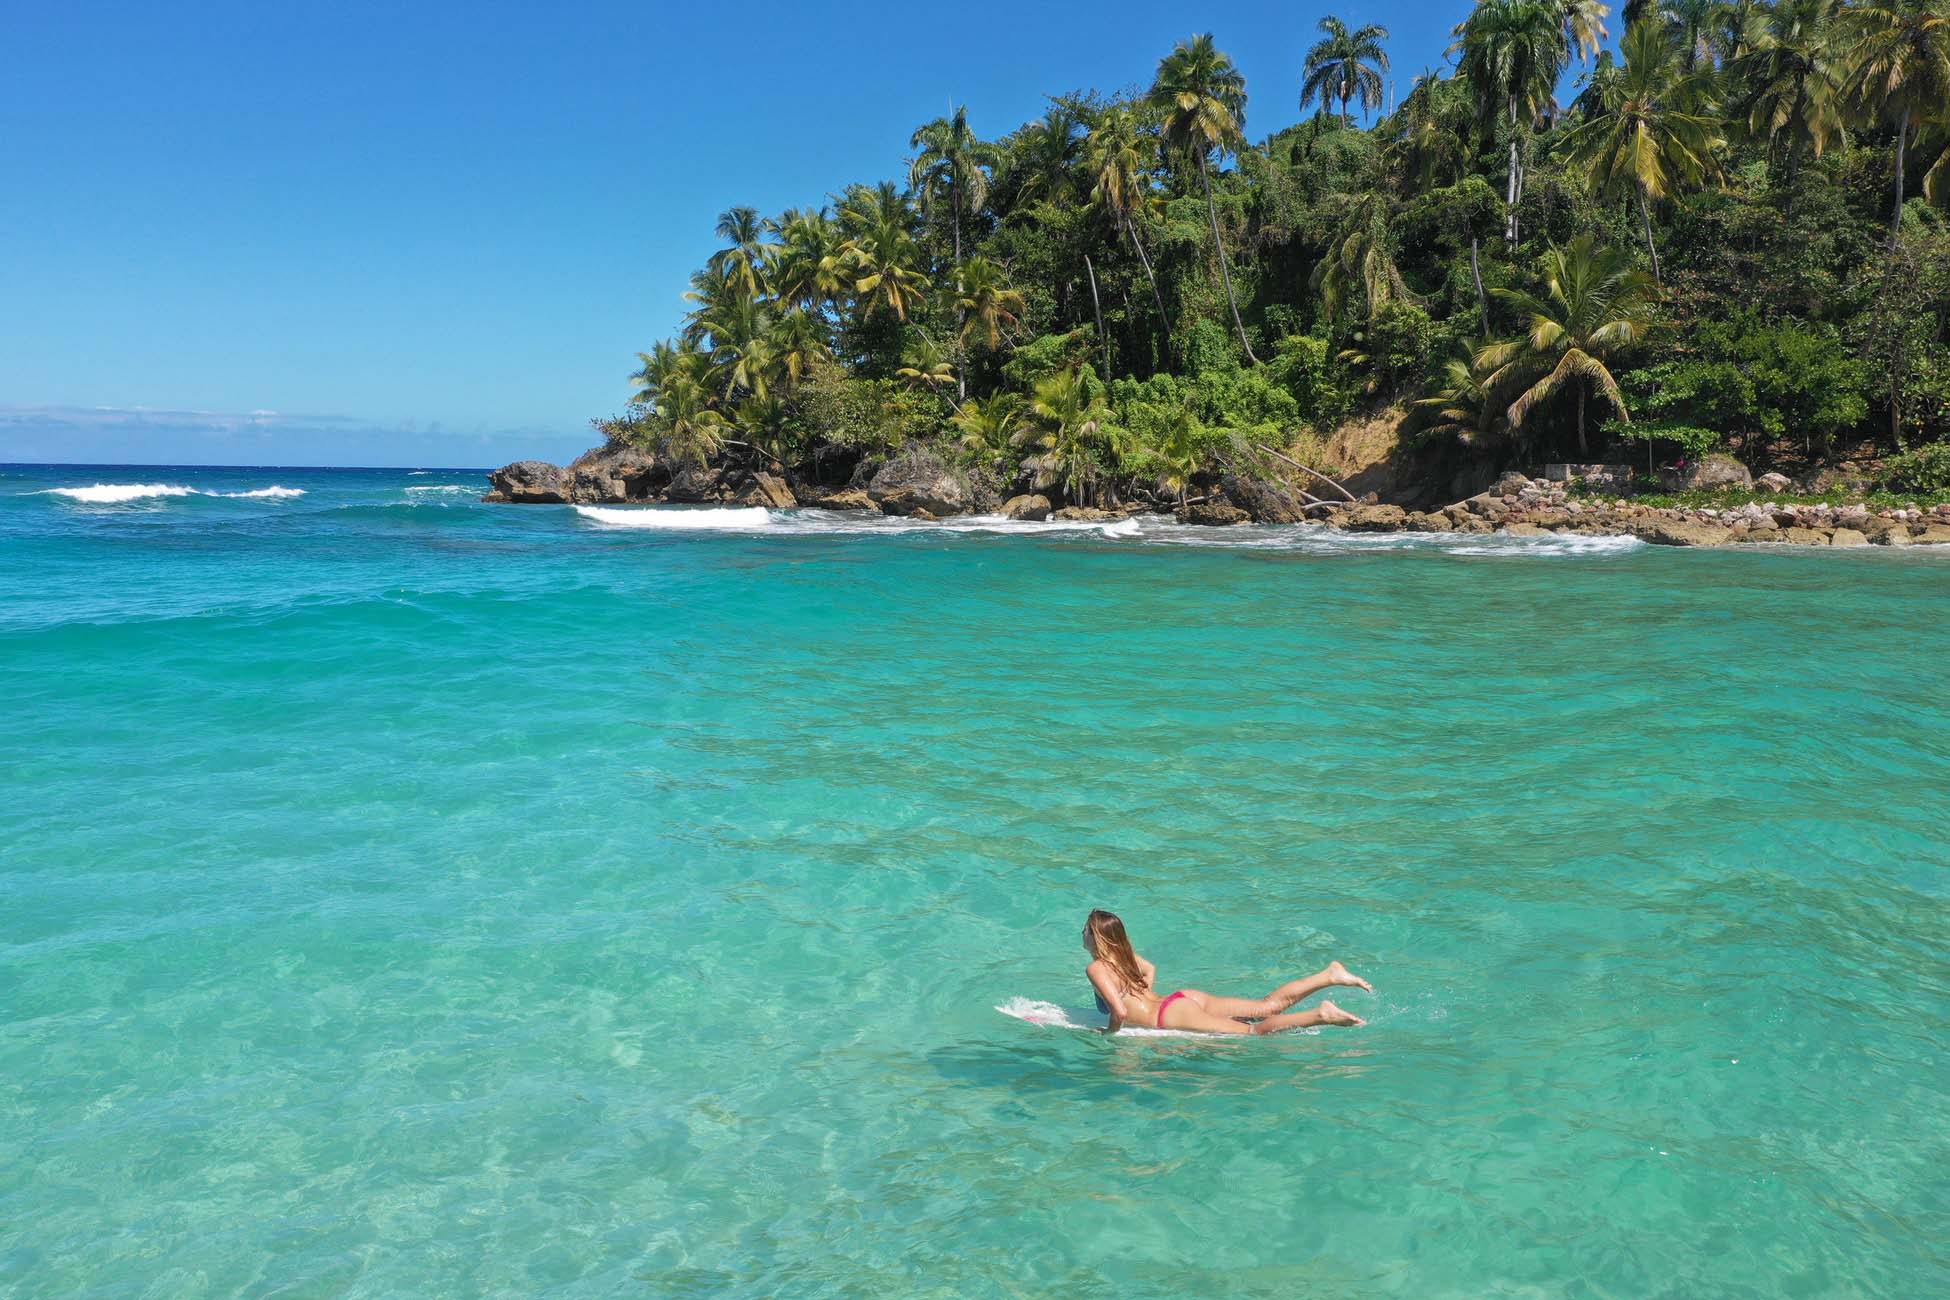 Caribbean islands are a tropical paradise